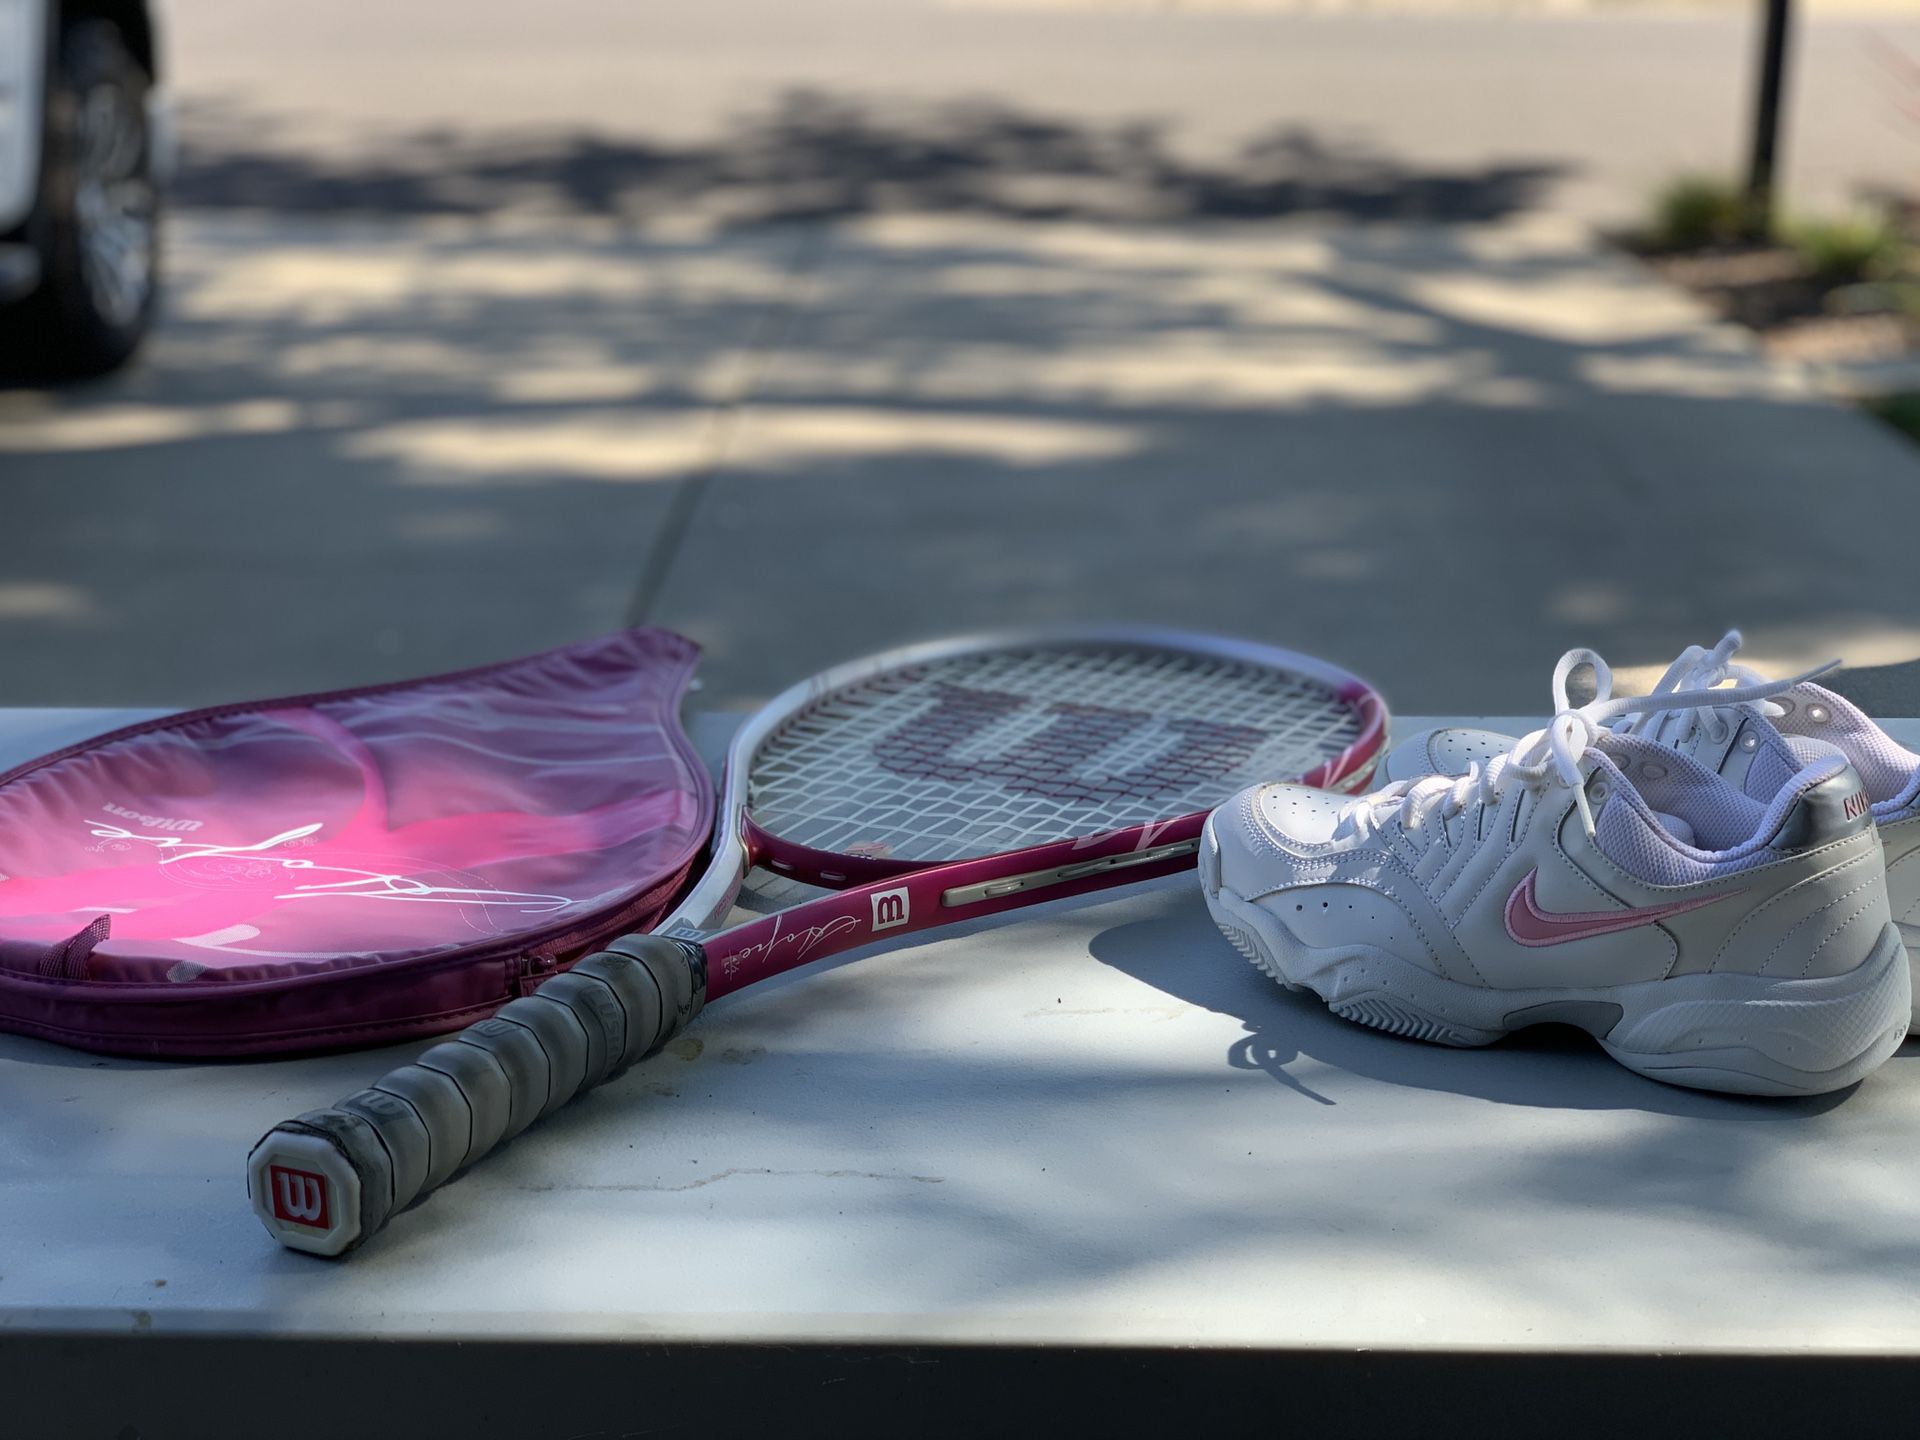 Wilson Tennis racket and Nike tennis shoes